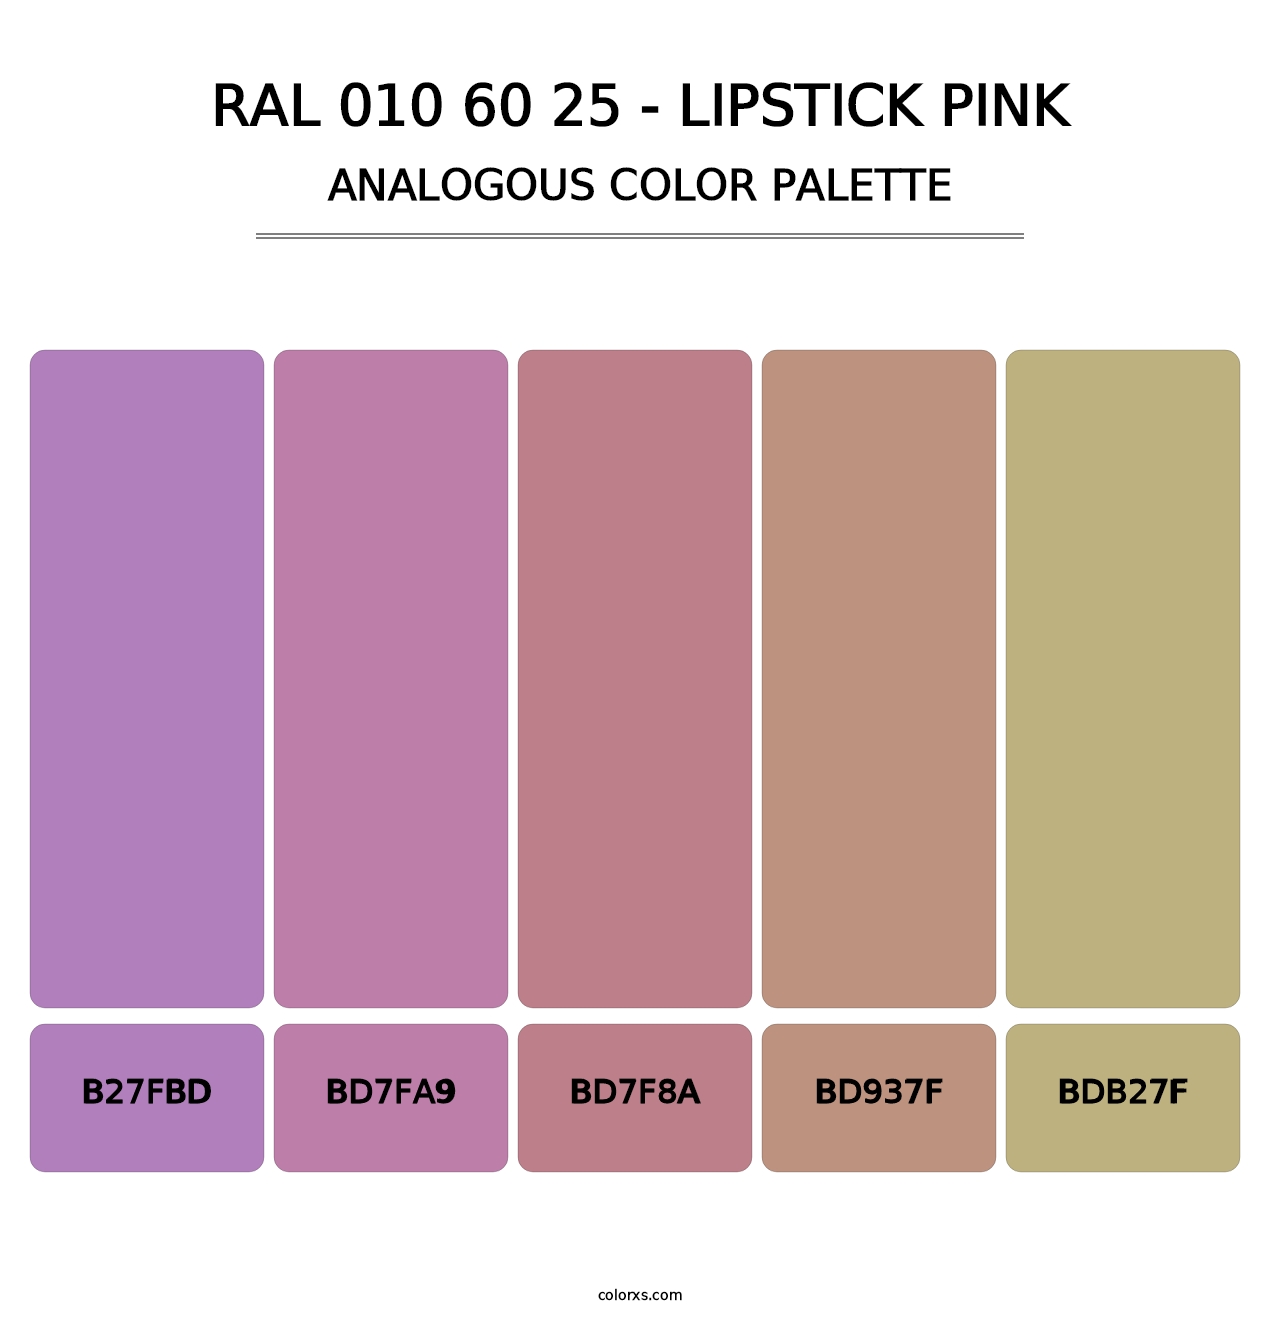 RAL 010 60 25 - Lipstick Pink - Analogous Color Palette